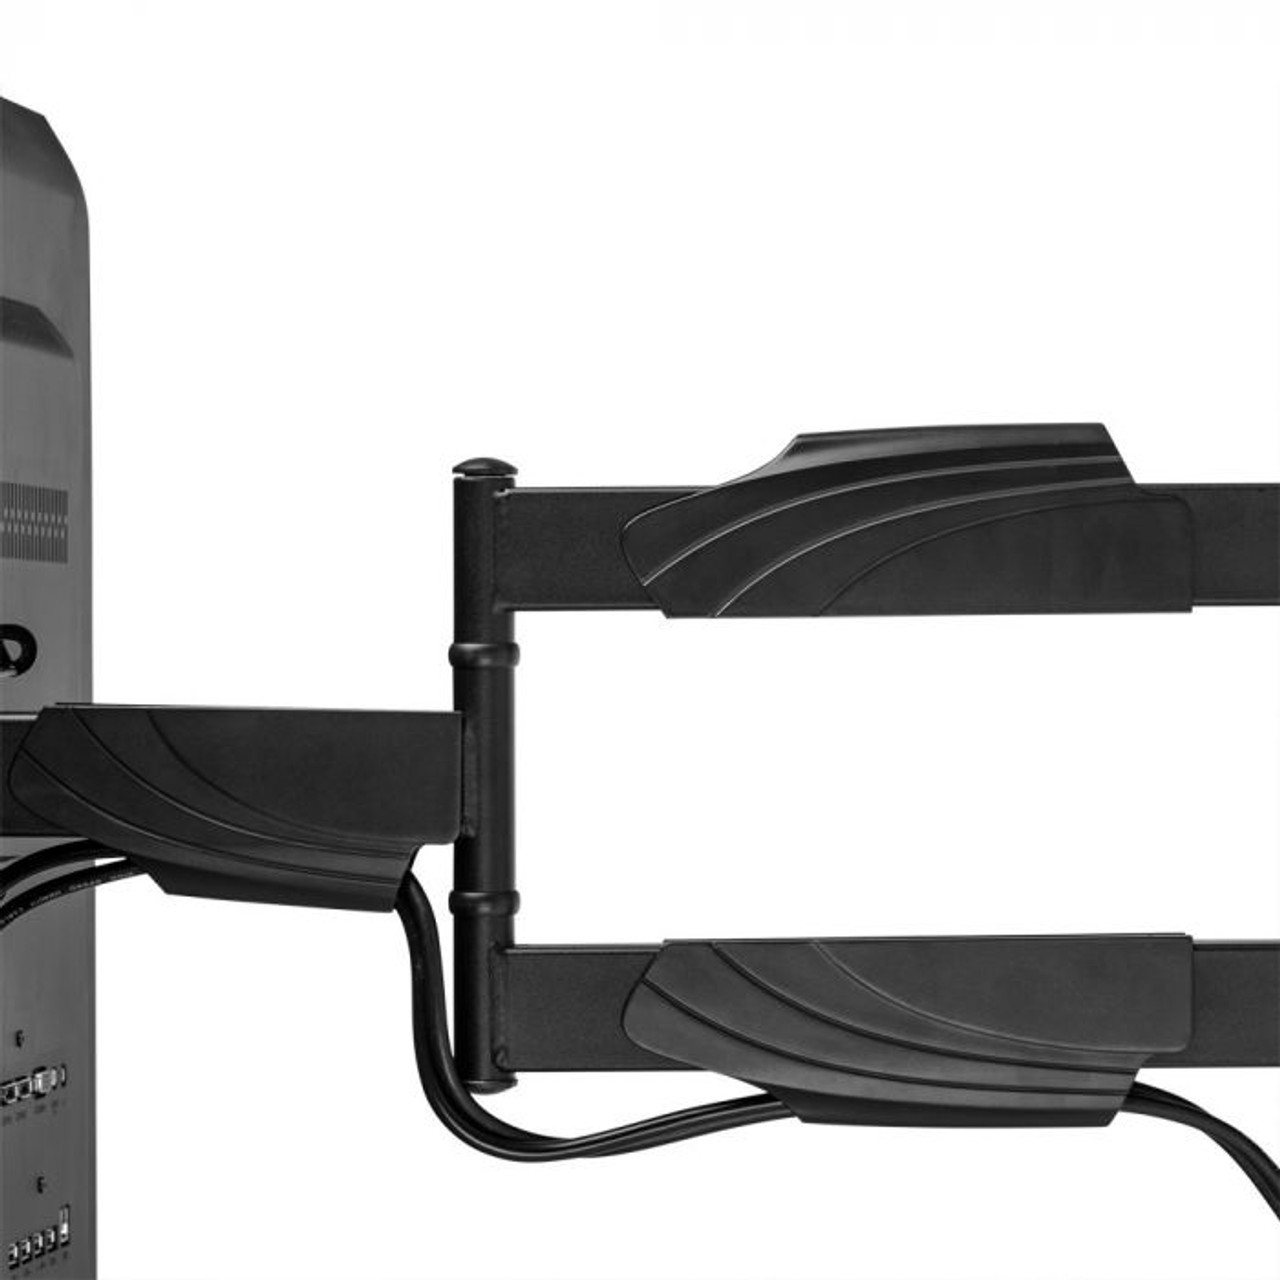 Atdec TH-1040-VFL 200x200mm VESA Ultra Slim Full Motion TV Wall Mount (35kg Max)